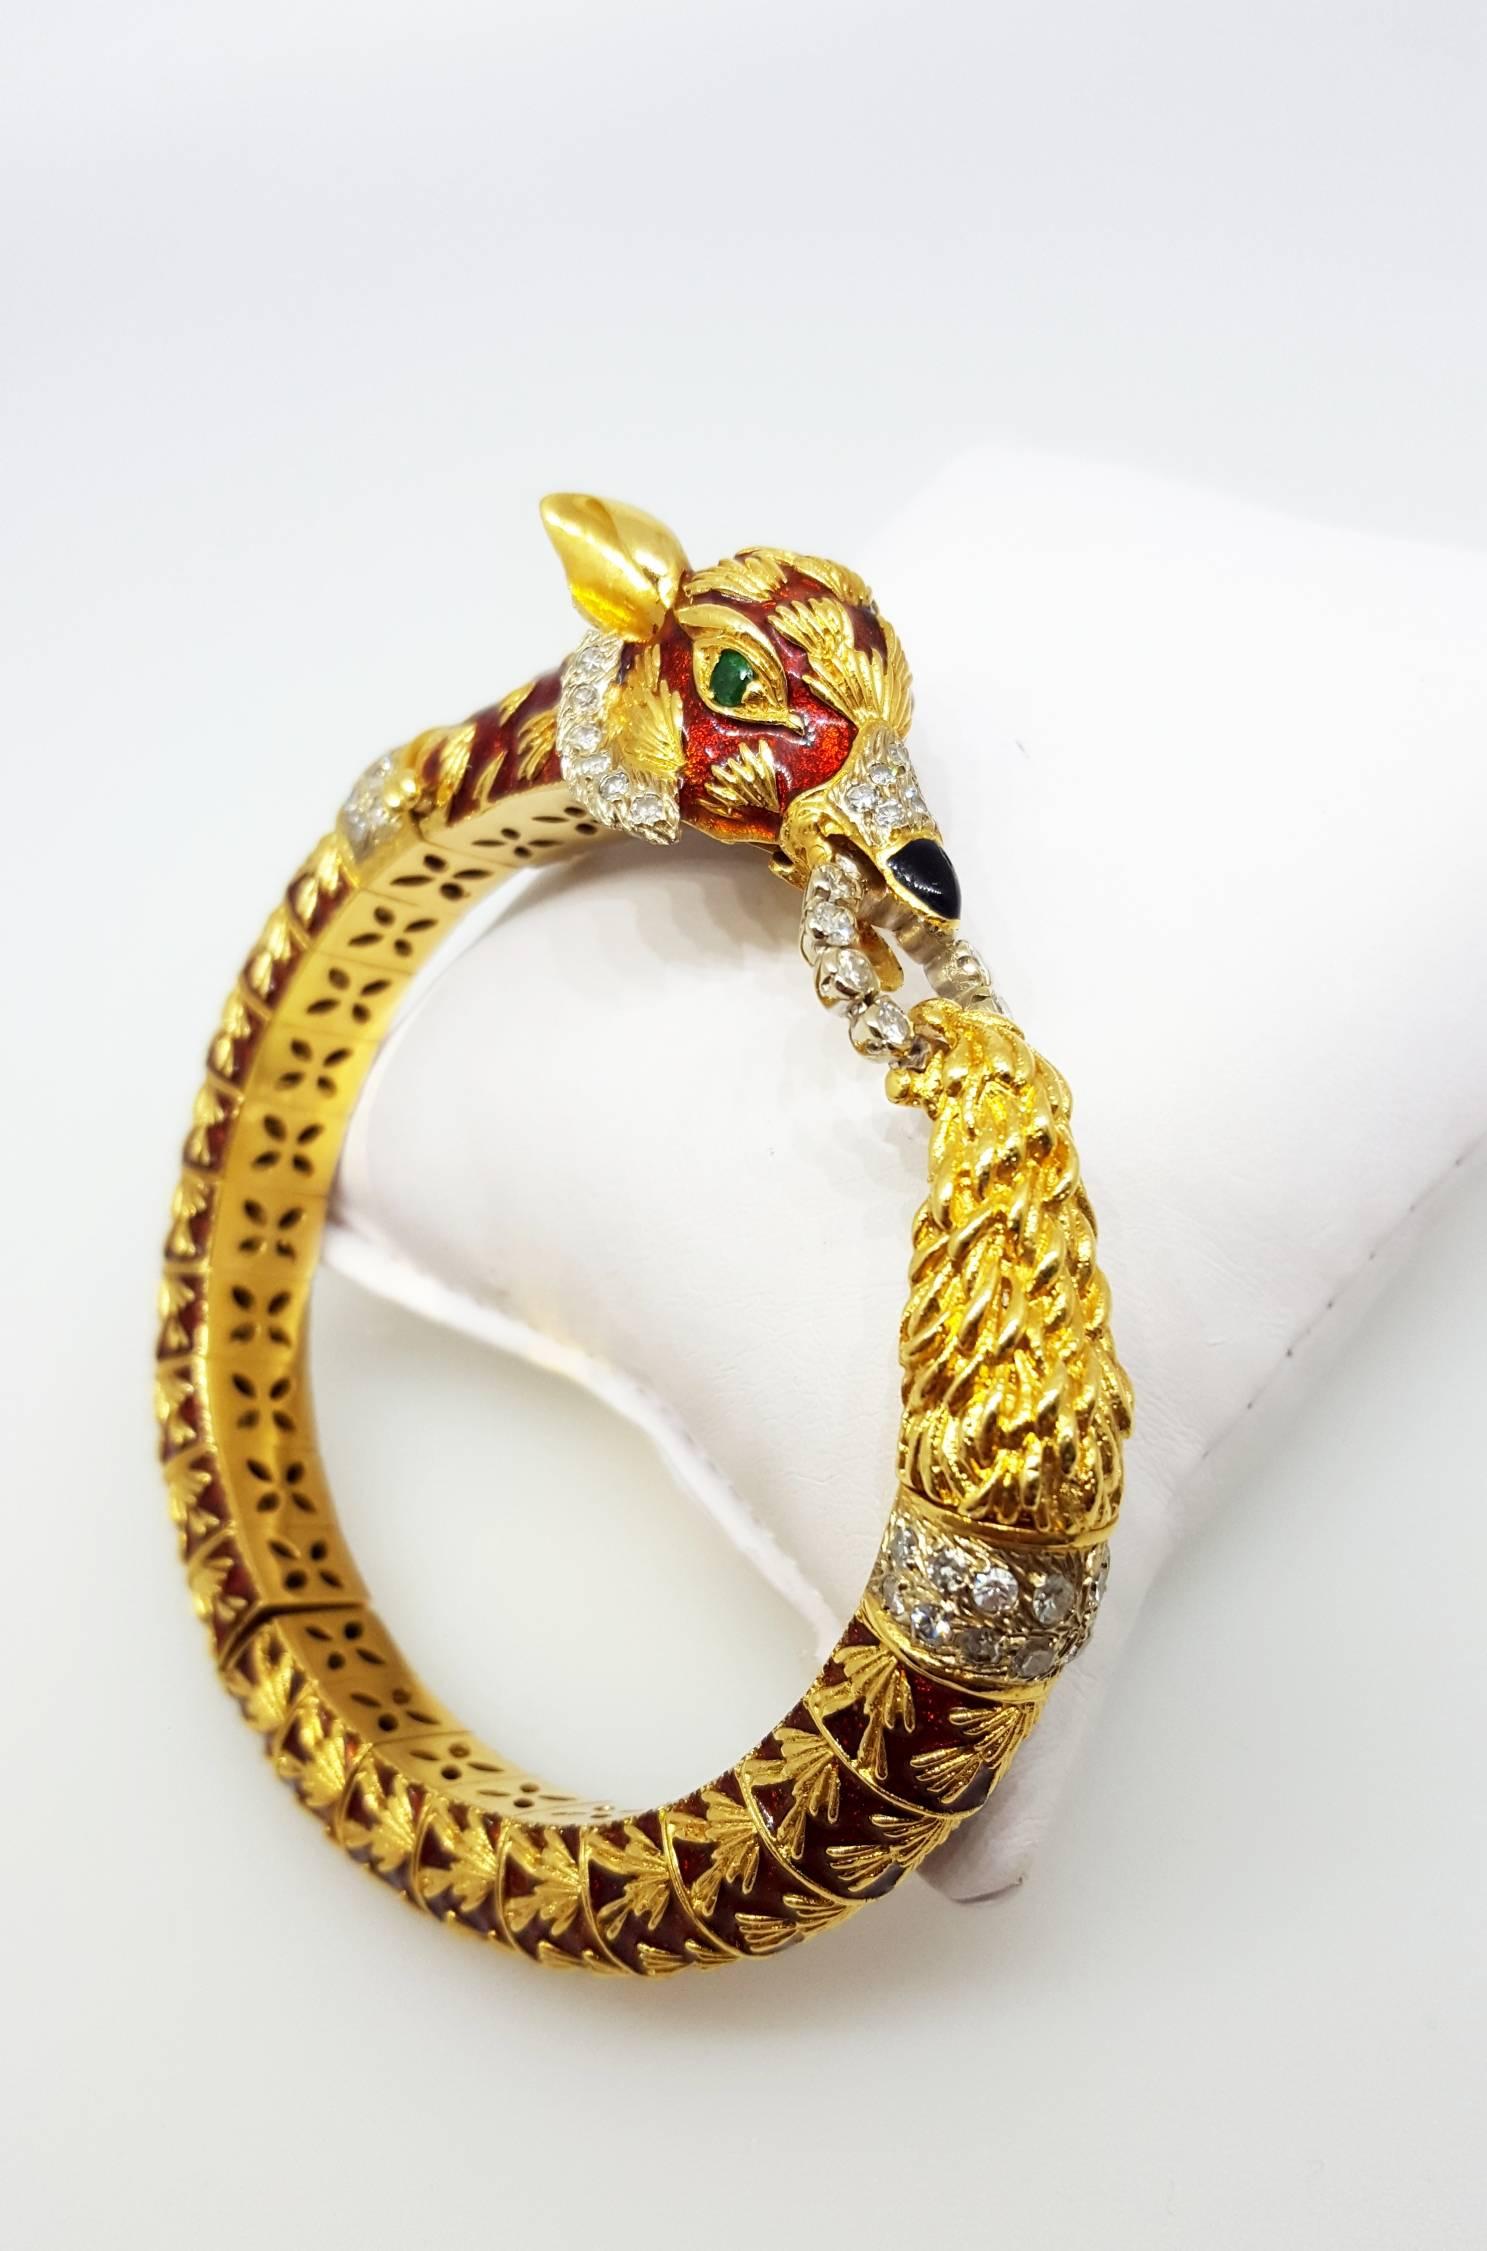 An 18 karat yellow gold fox bracelet. The bracelet is set with 58 diamonds that weigh 1.45cttw. The bracelet features a, red enamel, fox head design with emerald eyes. The bracelet has a double push button release. 